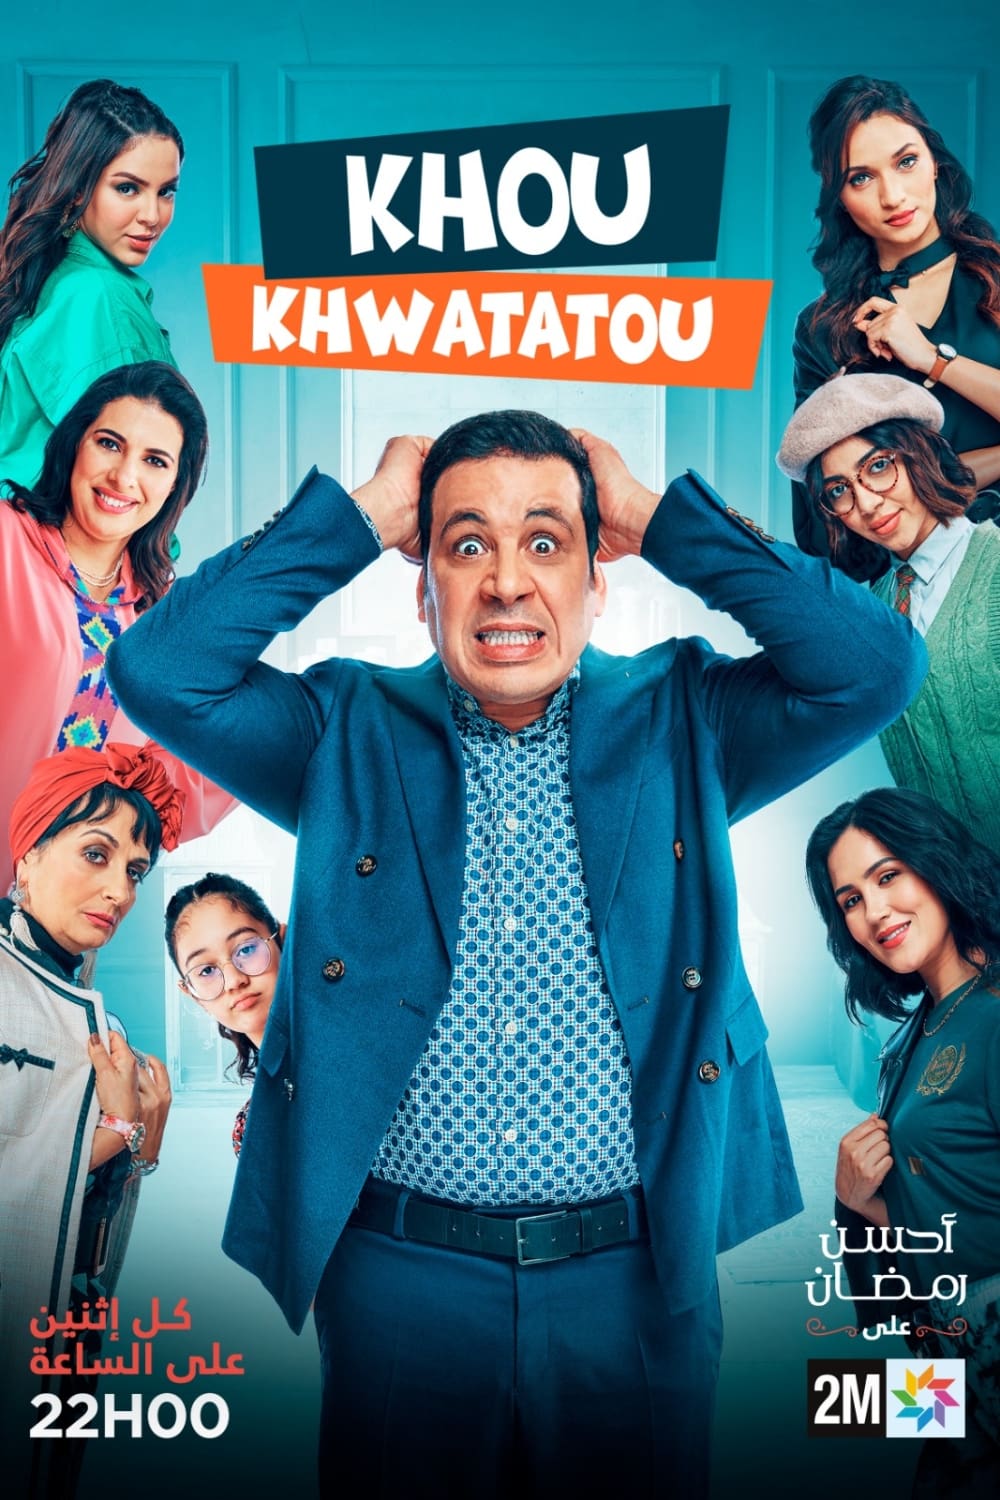 TV ratings for Khou Khwatatou (خو خواتاتو) in the United Kingdom. 2M TV series